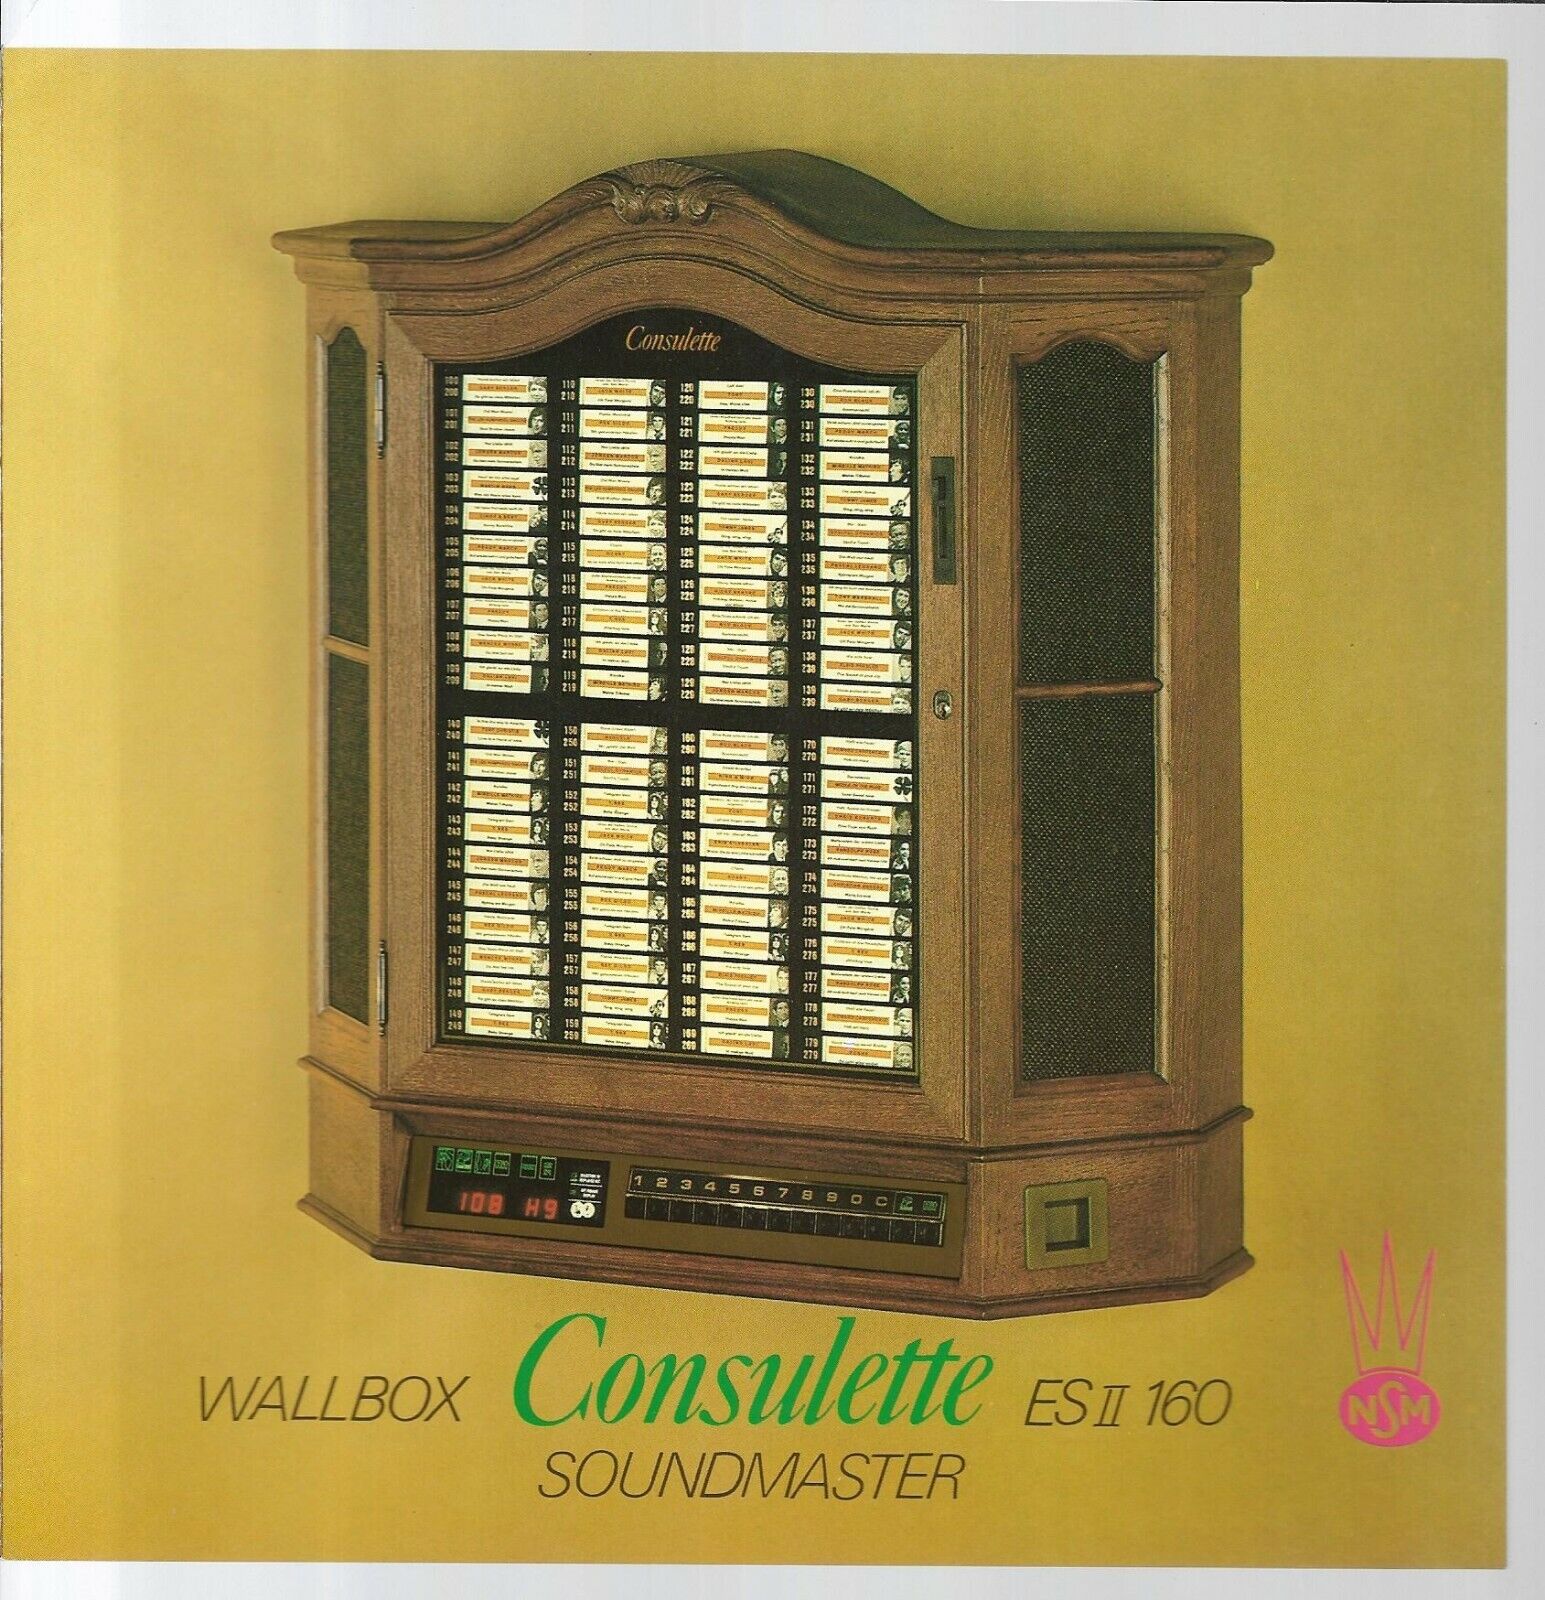 MR839:Wallbox Consulette ESII 160 Soundmaster Color Advertising Flyer Pamphlet